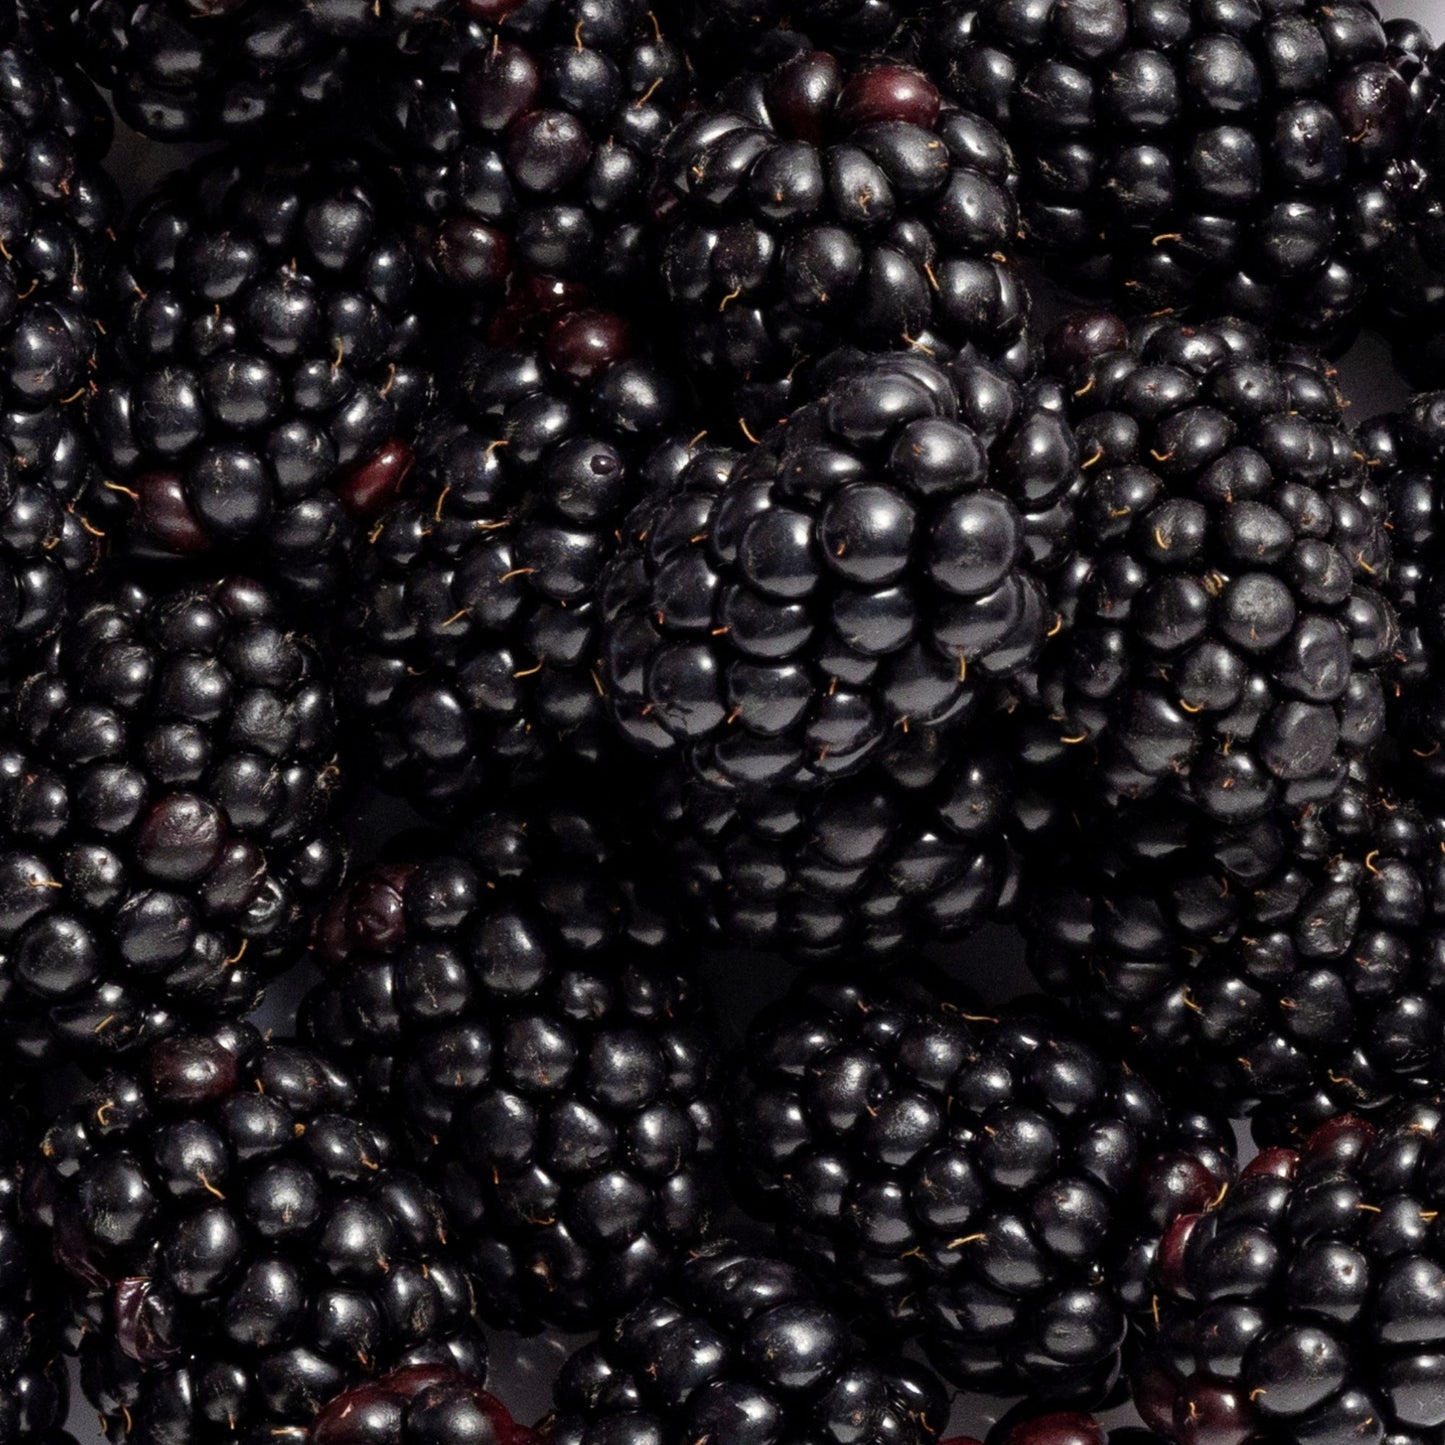 Blackberry Seed Oil